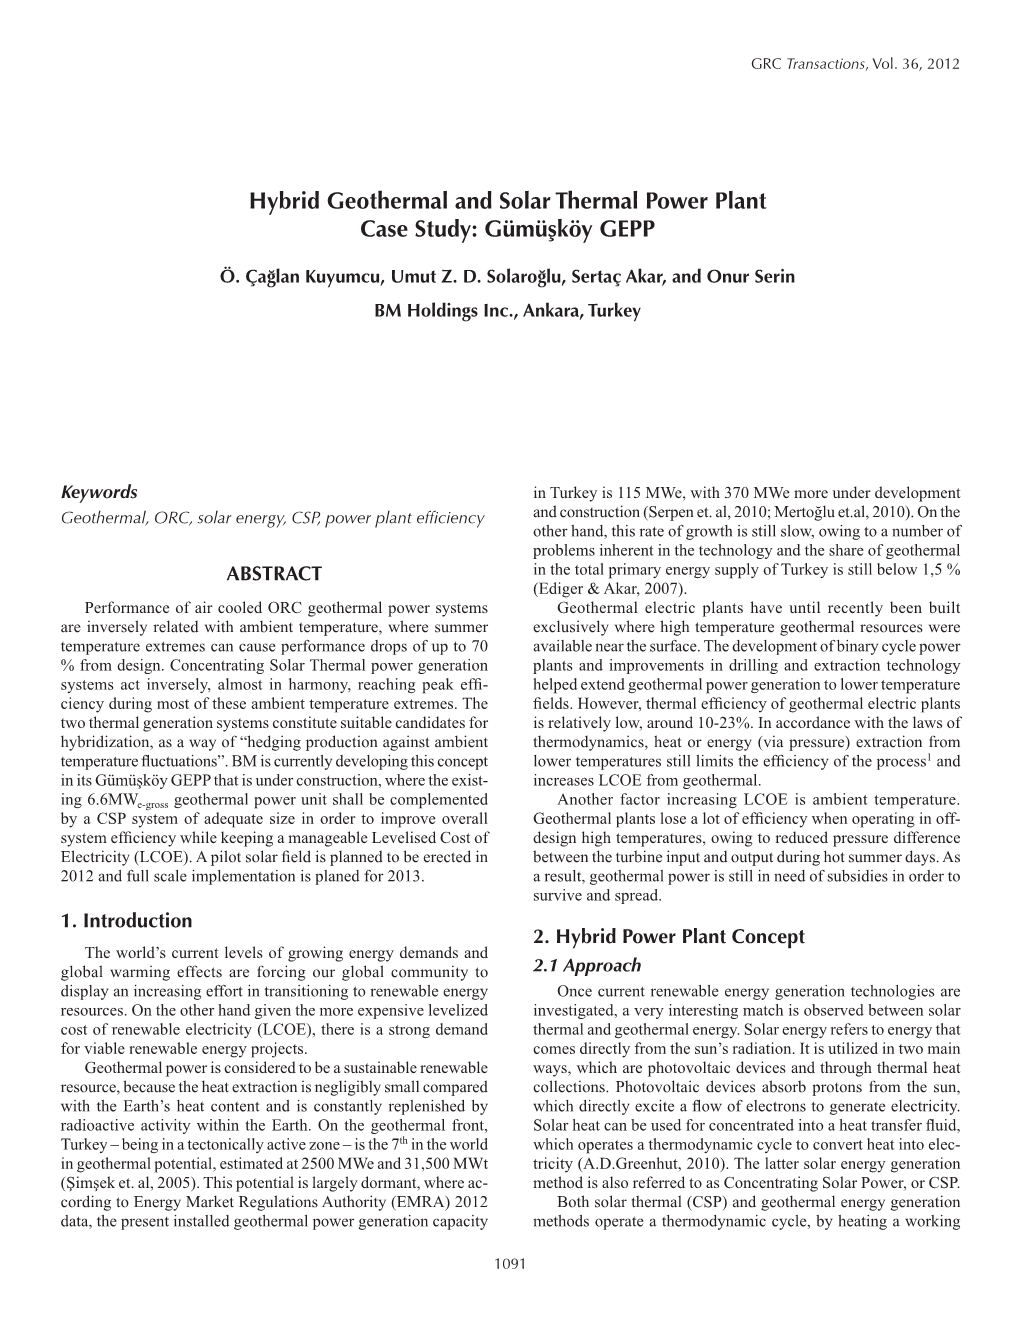 Hybrid Geothermal and Solar Thermal Power Plant Case Study: Gümüsköy GEPP